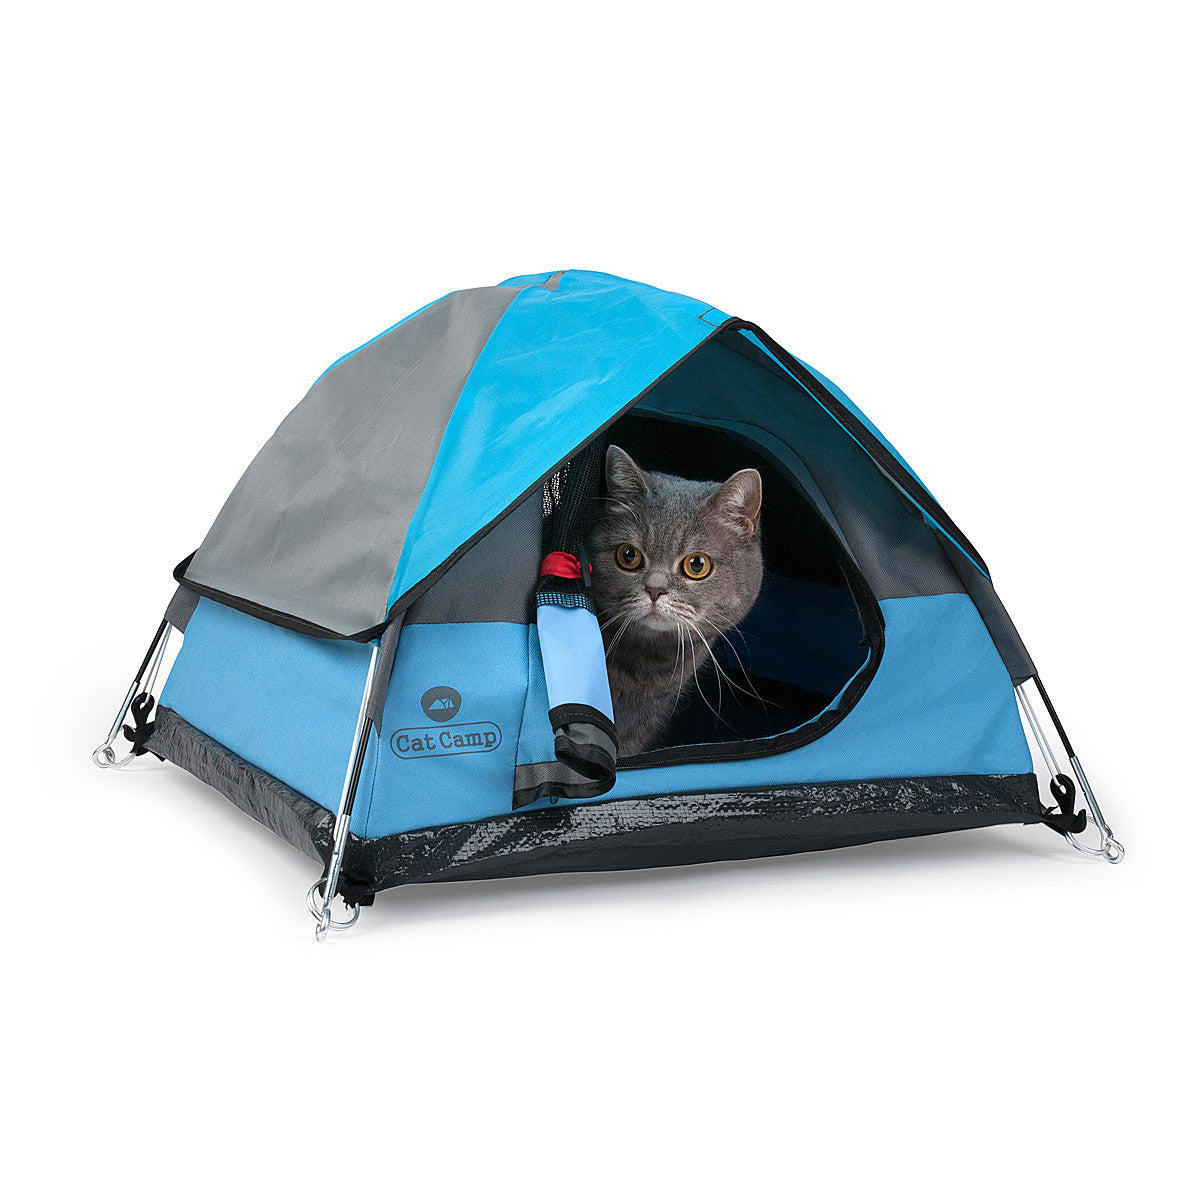 Cat Camp - The teeny tiny tent for 